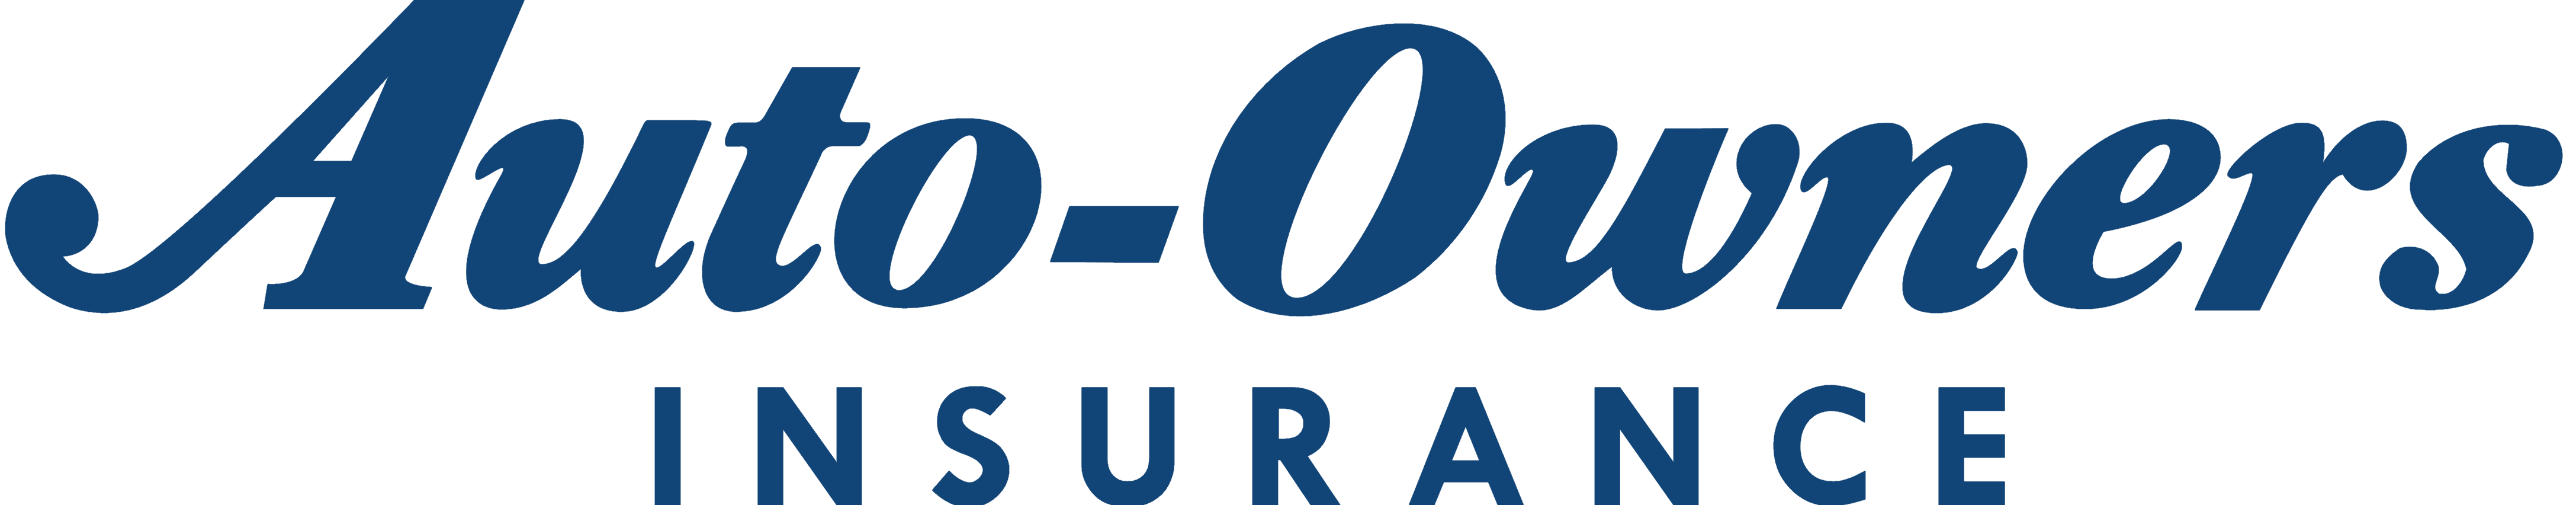 Auto-Owners Insurance logo, logotype